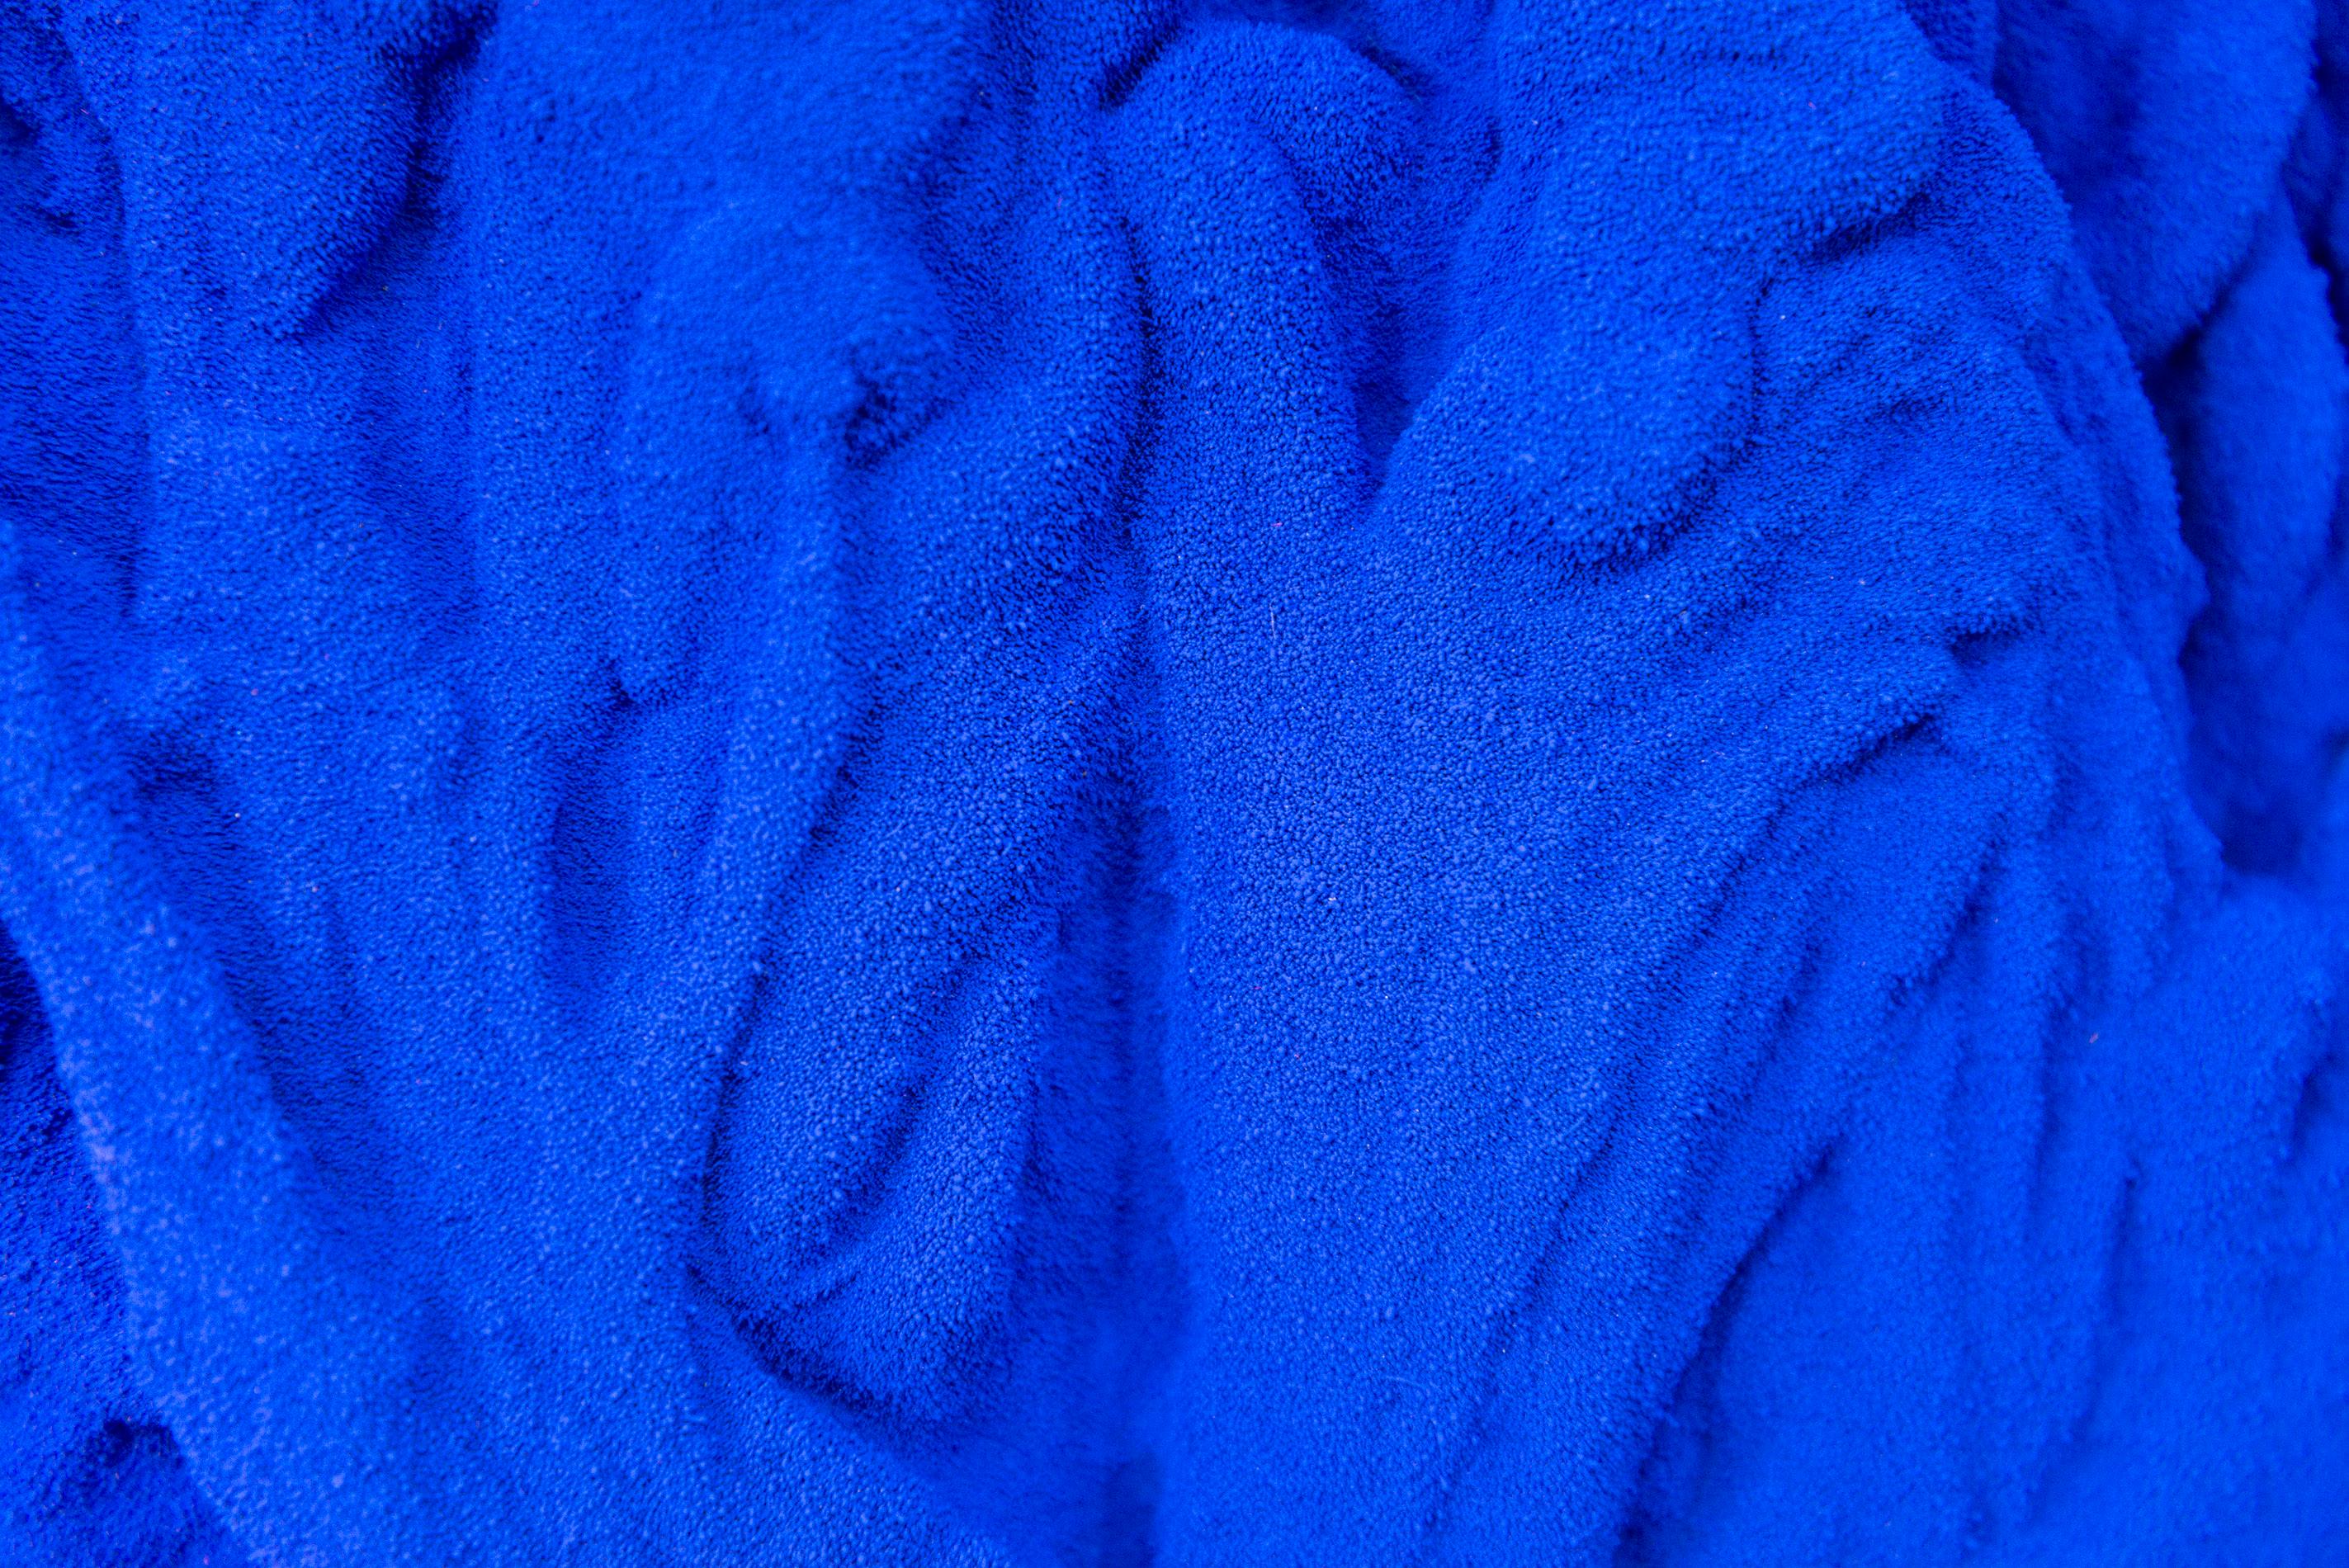 Blue Matter 2 - matte, blue, textured, abstract, mixed media wall sculpture For Sale 5